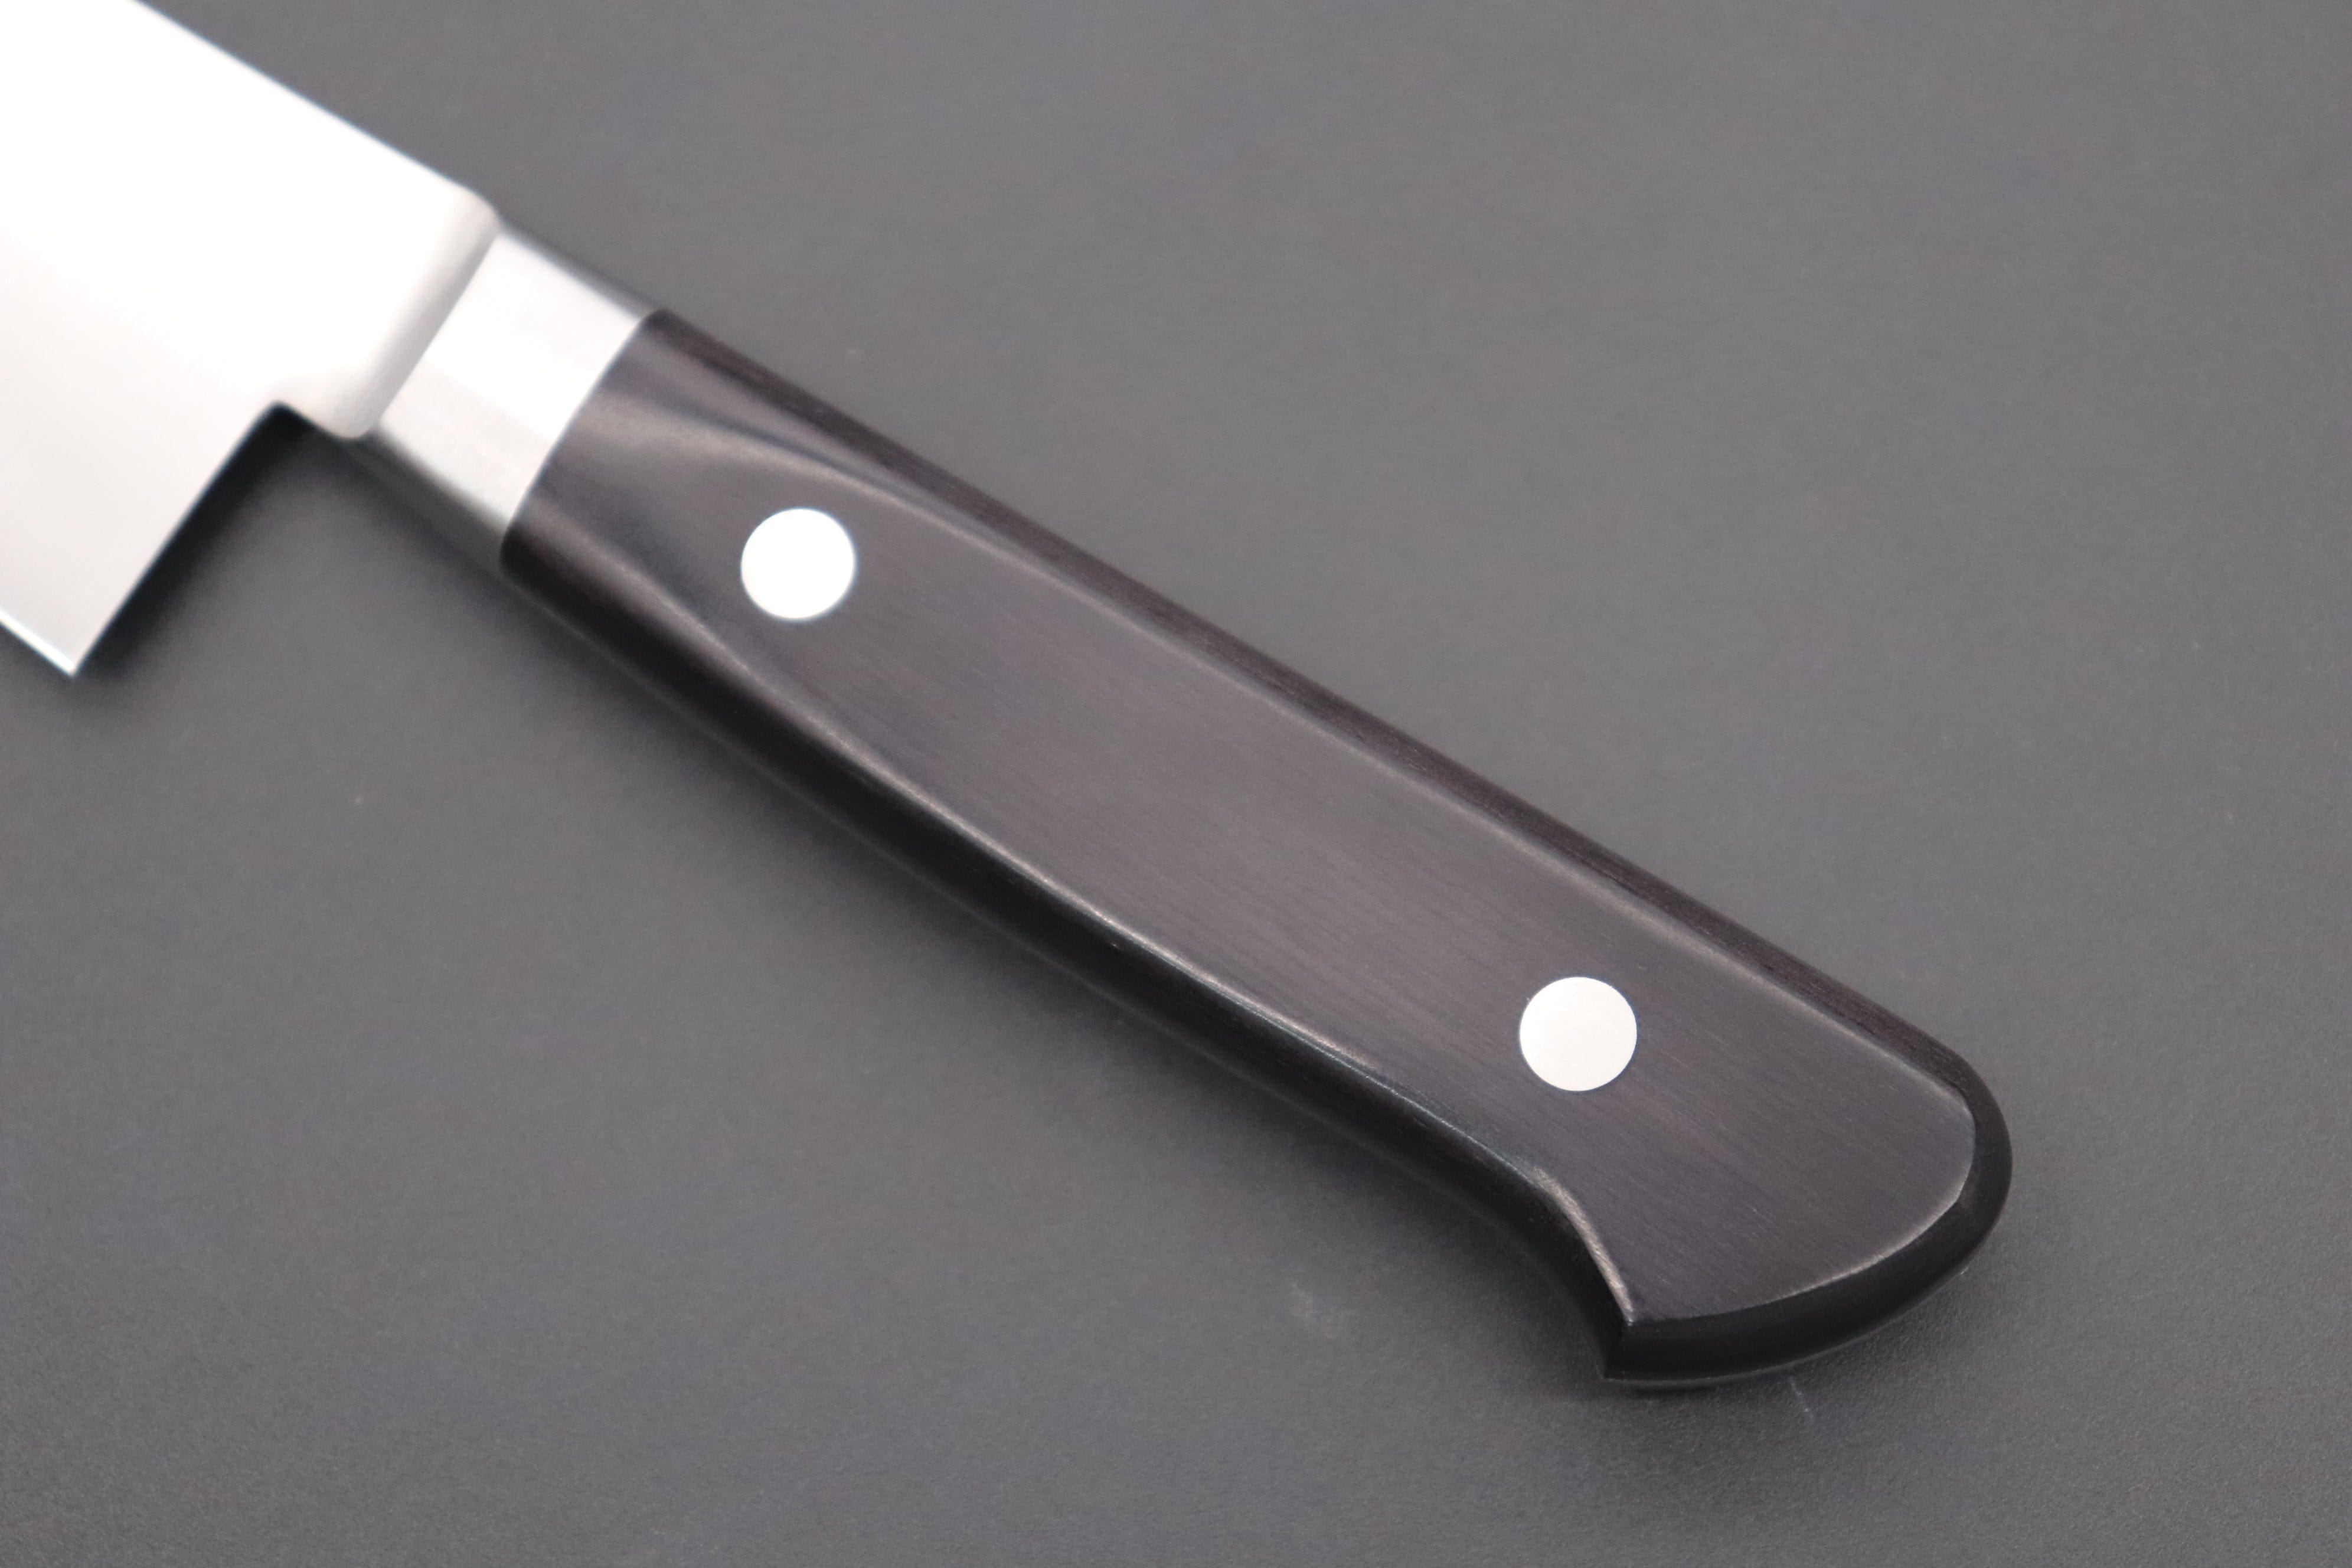  MB Kitchen Knife Accessories: 3-Stage Knife Sharpener